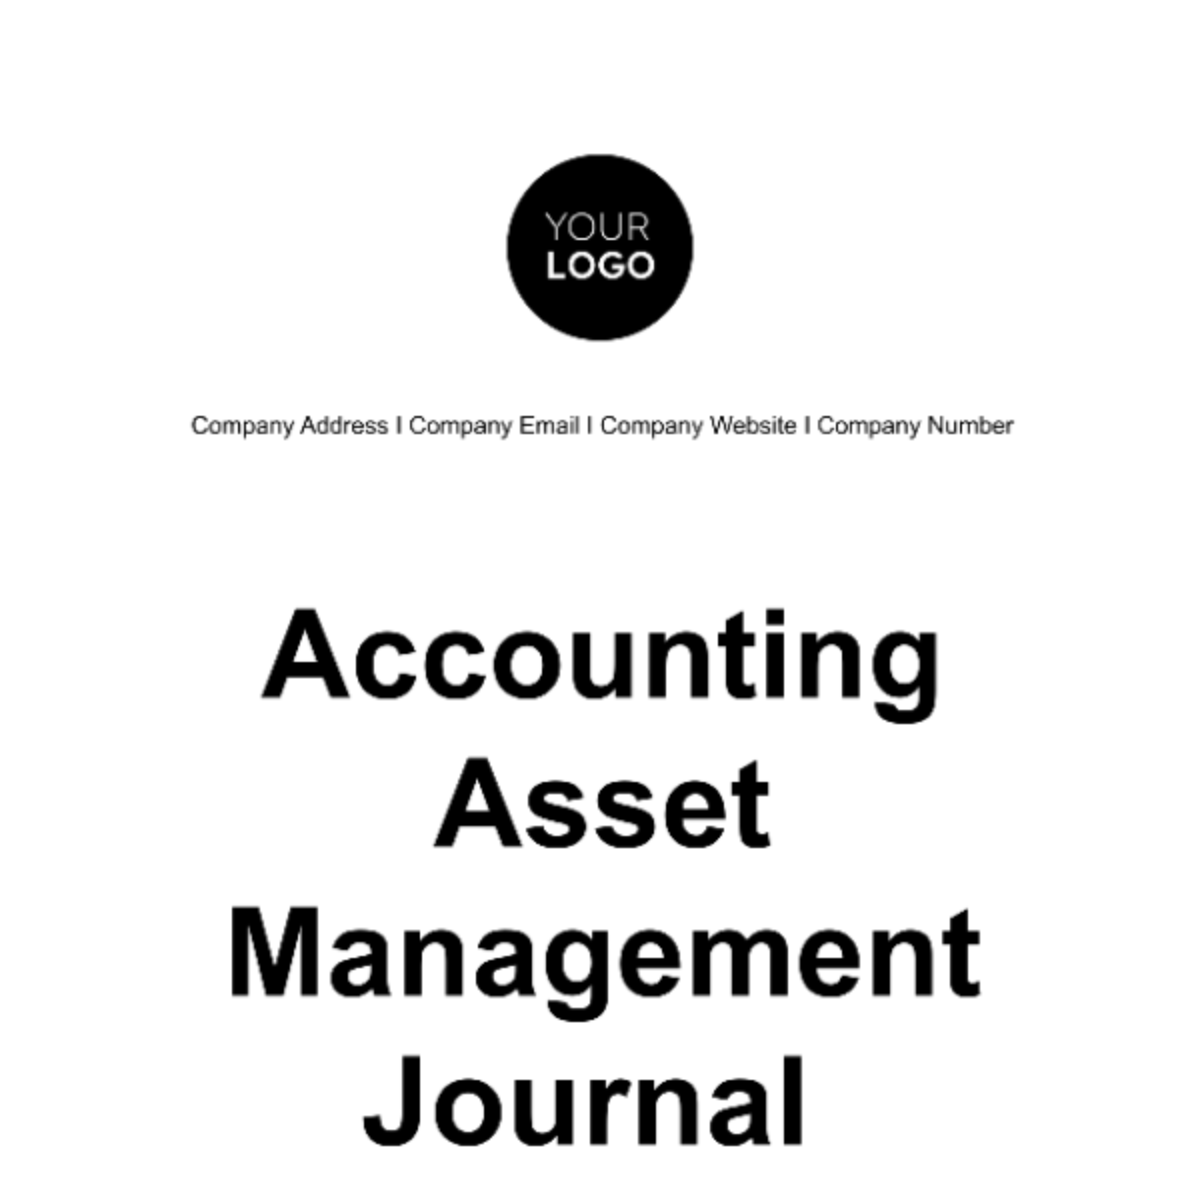 Accounting Asset Management Journal Template